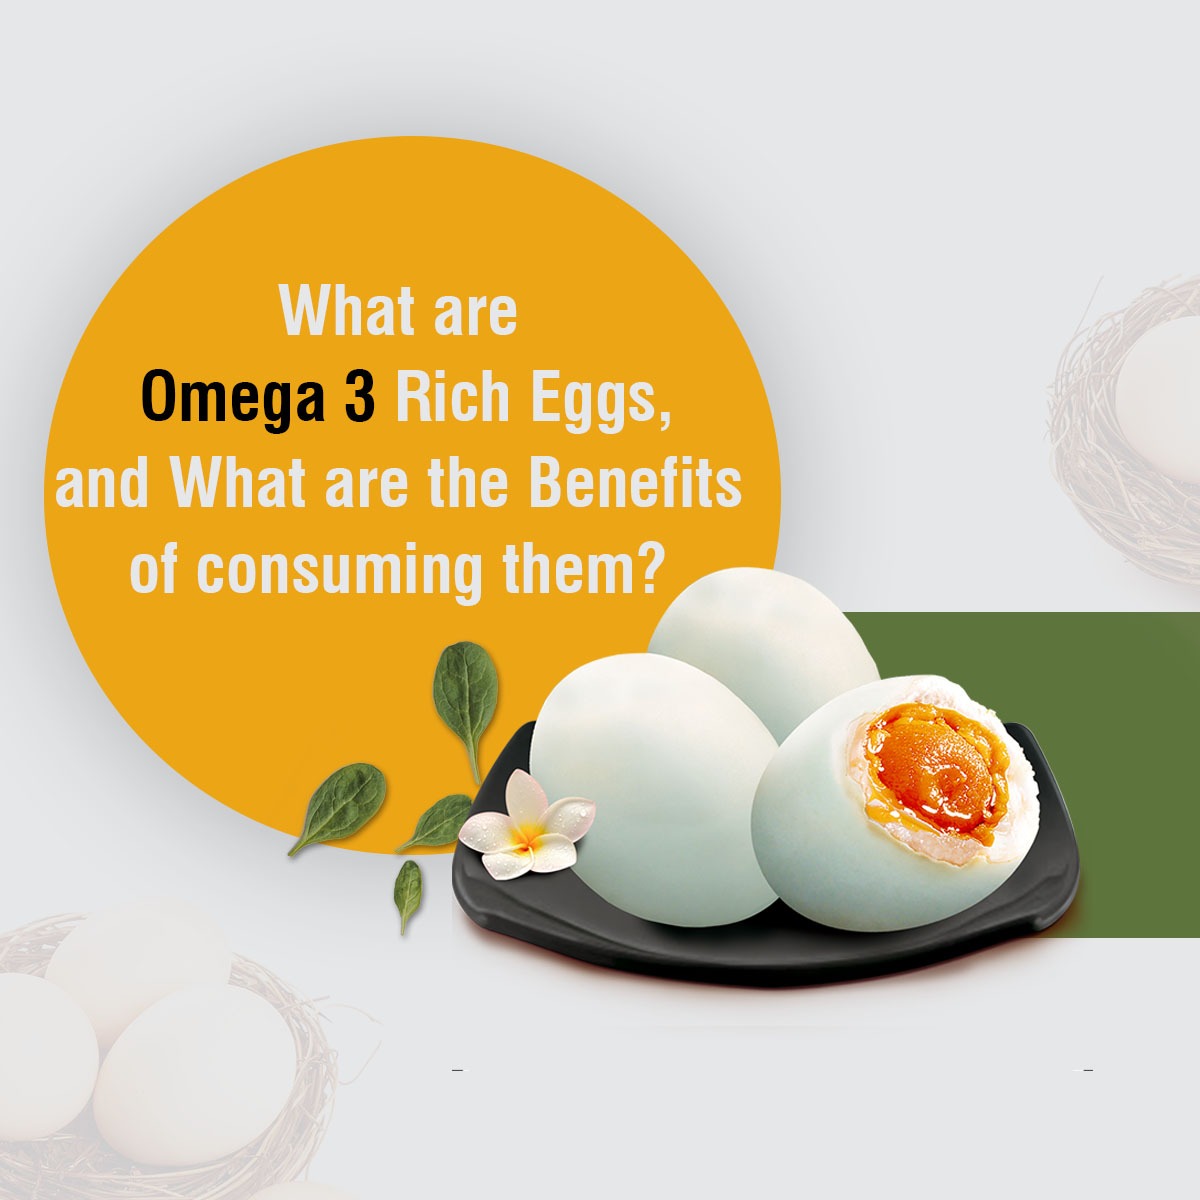 Omega-3 rich eggs